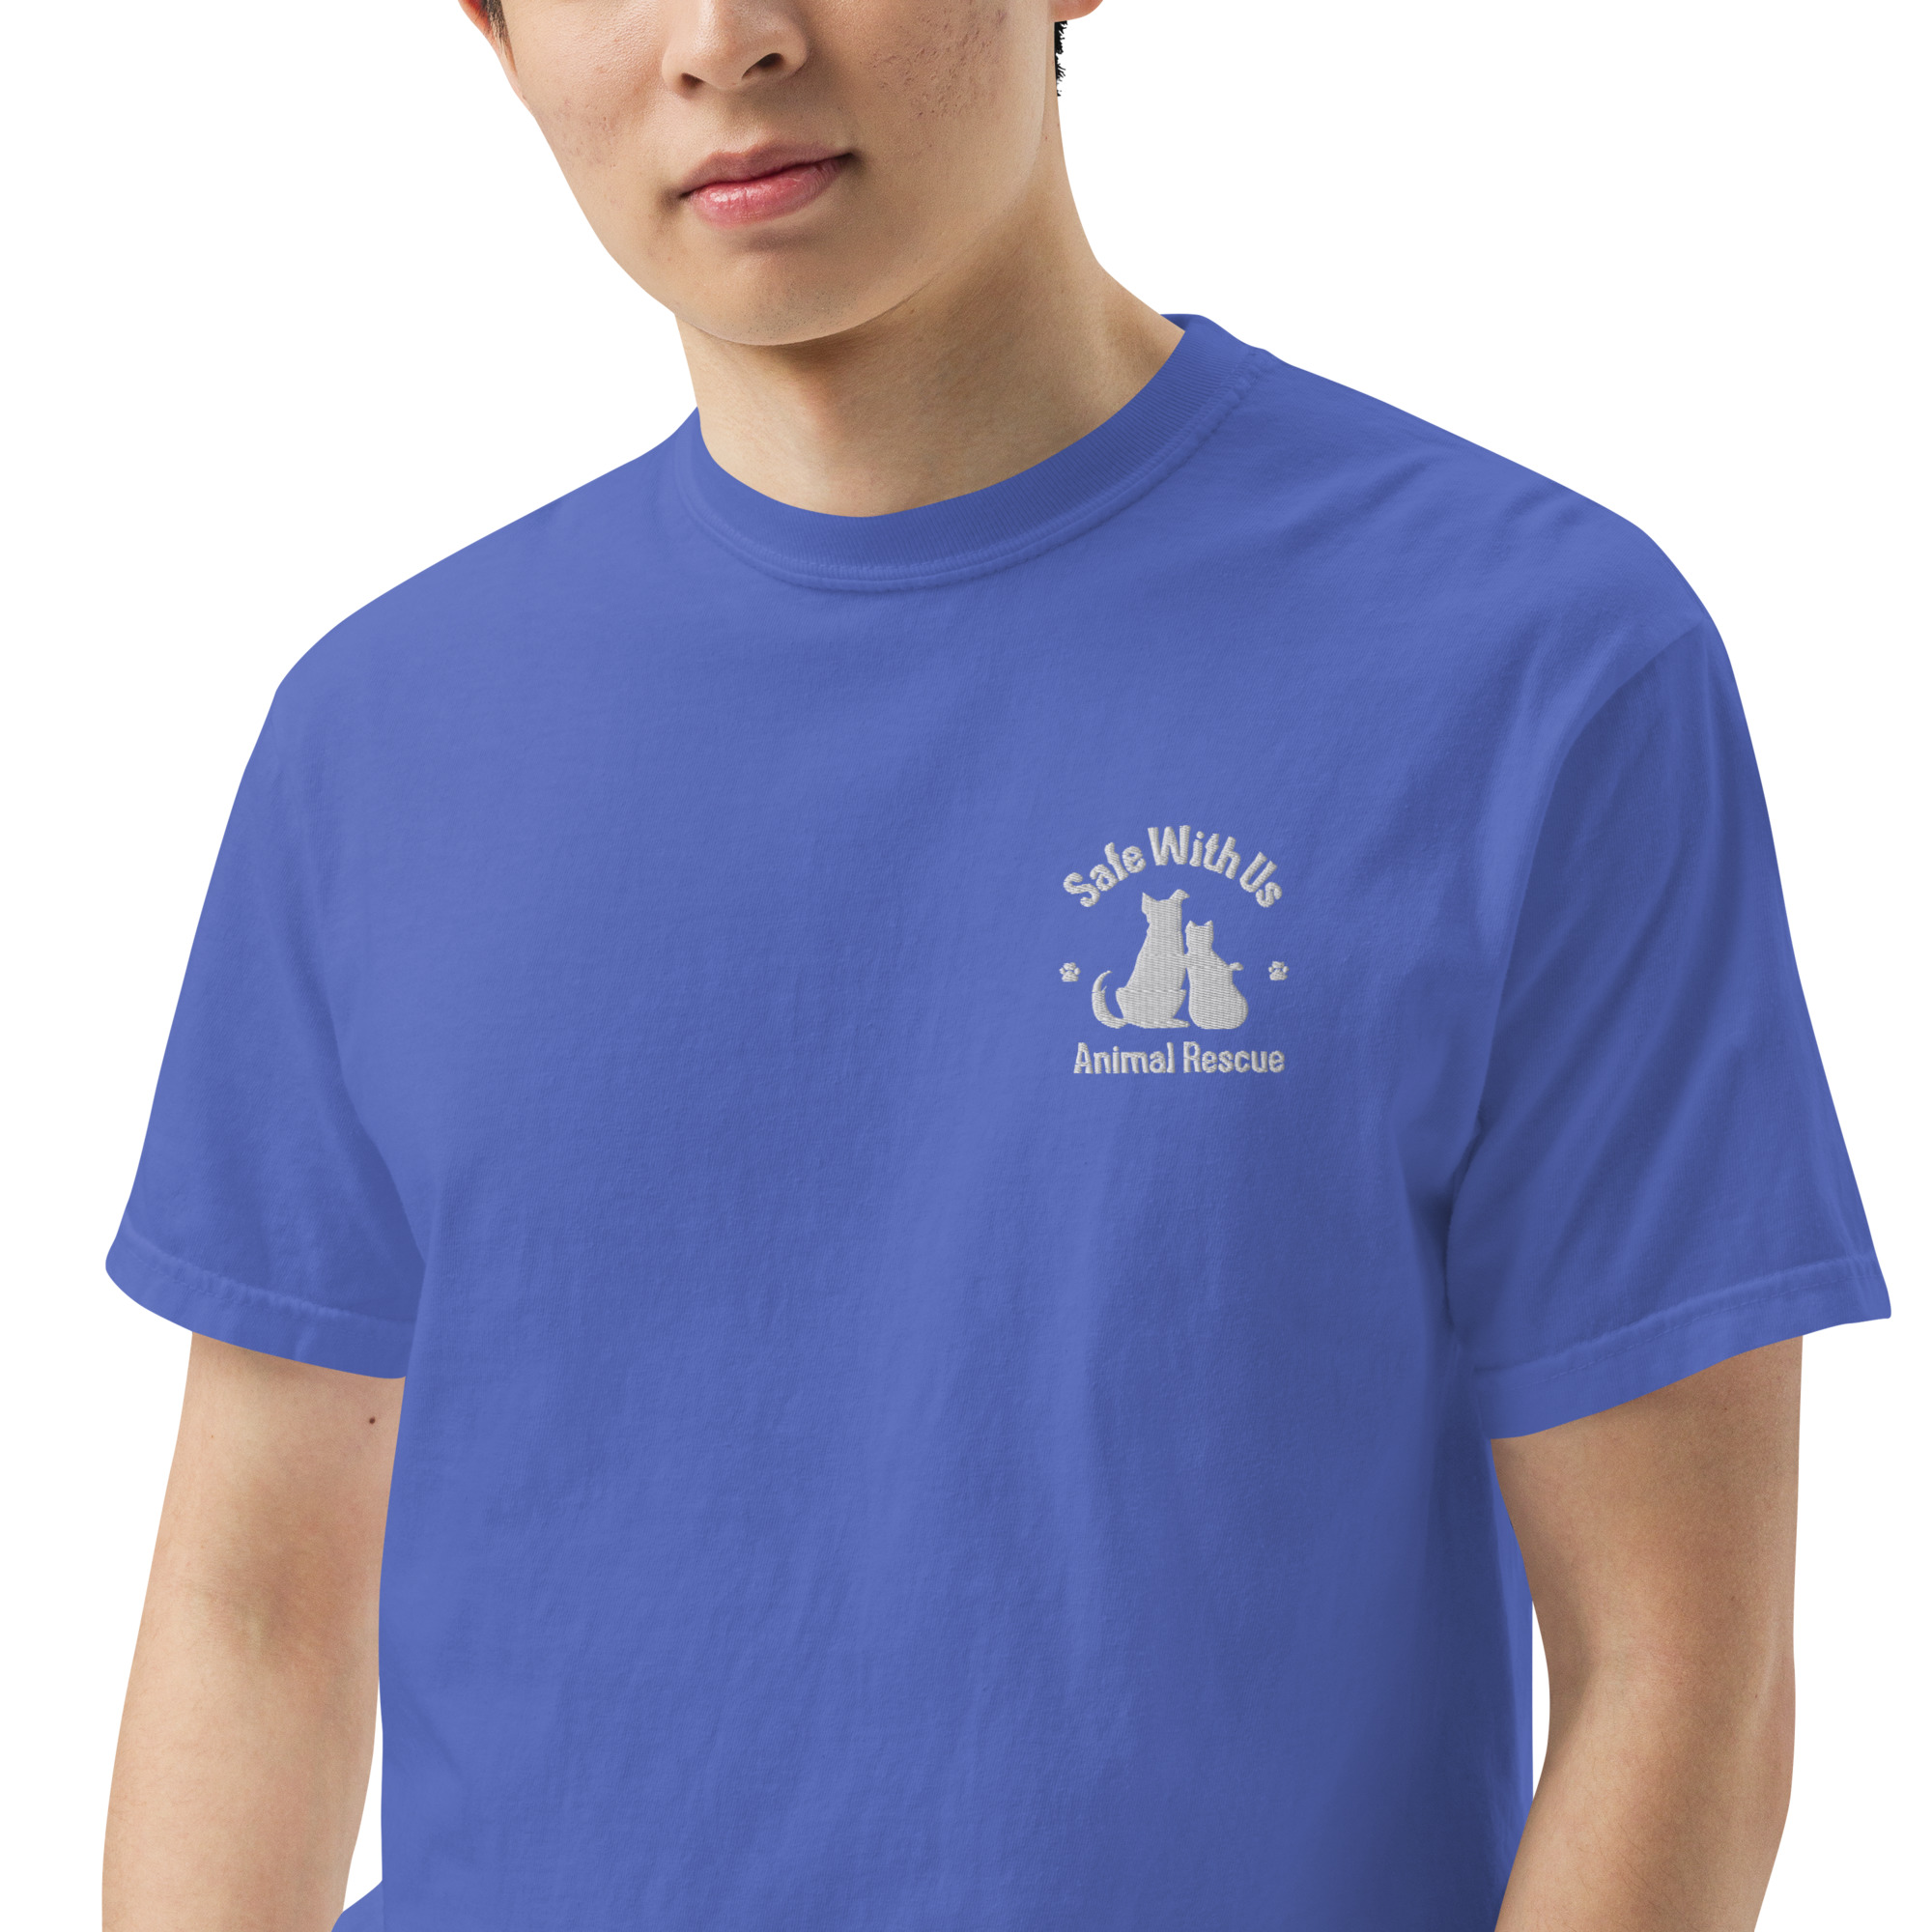 mens-garment-dyed-heavyweight-t-shirt-flo-blue-zoomed-in-3-6415fedc28fe7.jpg